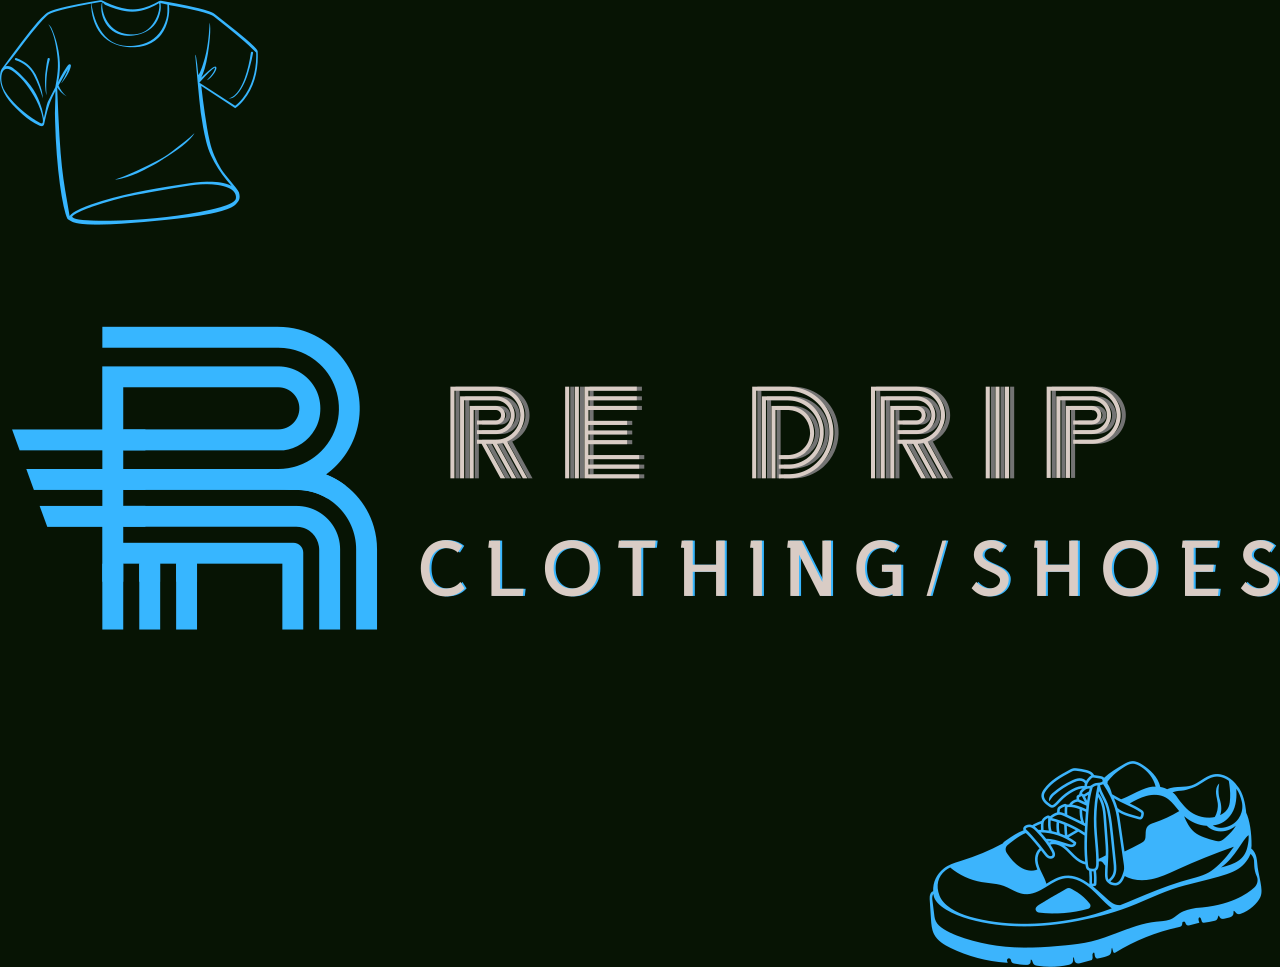 Re drip  's logo